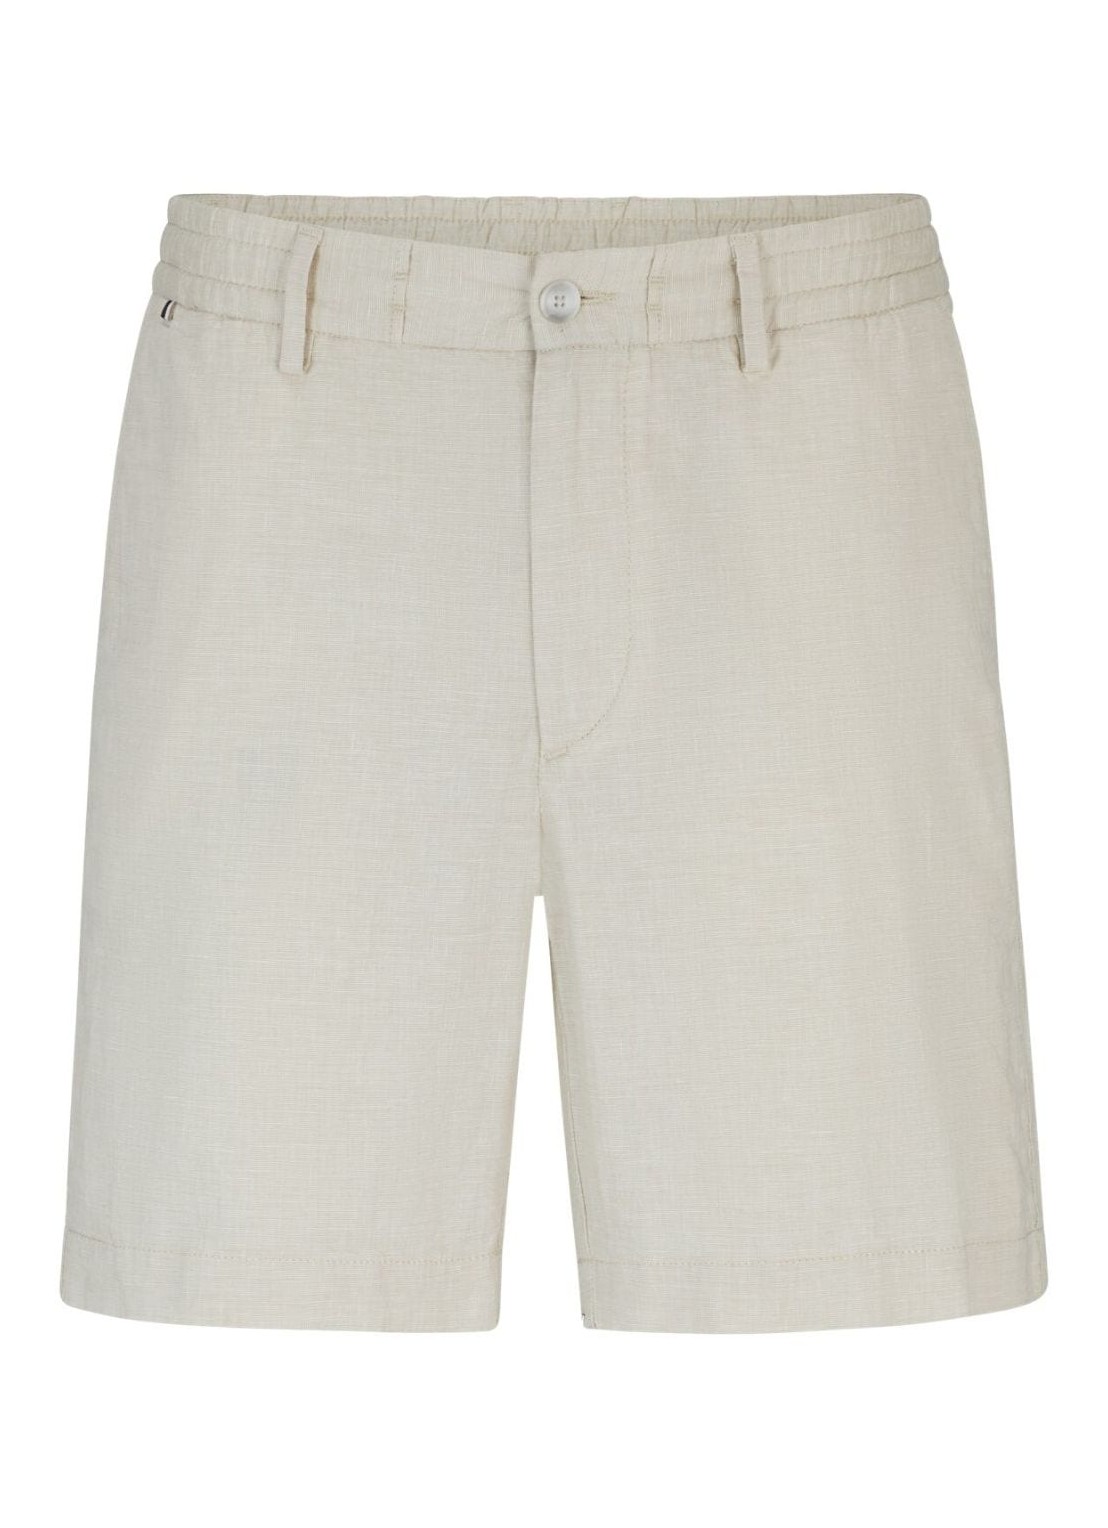 Pantalon corto boss short pant mankane-ds-shorts - 50512555 276 talla beige
 